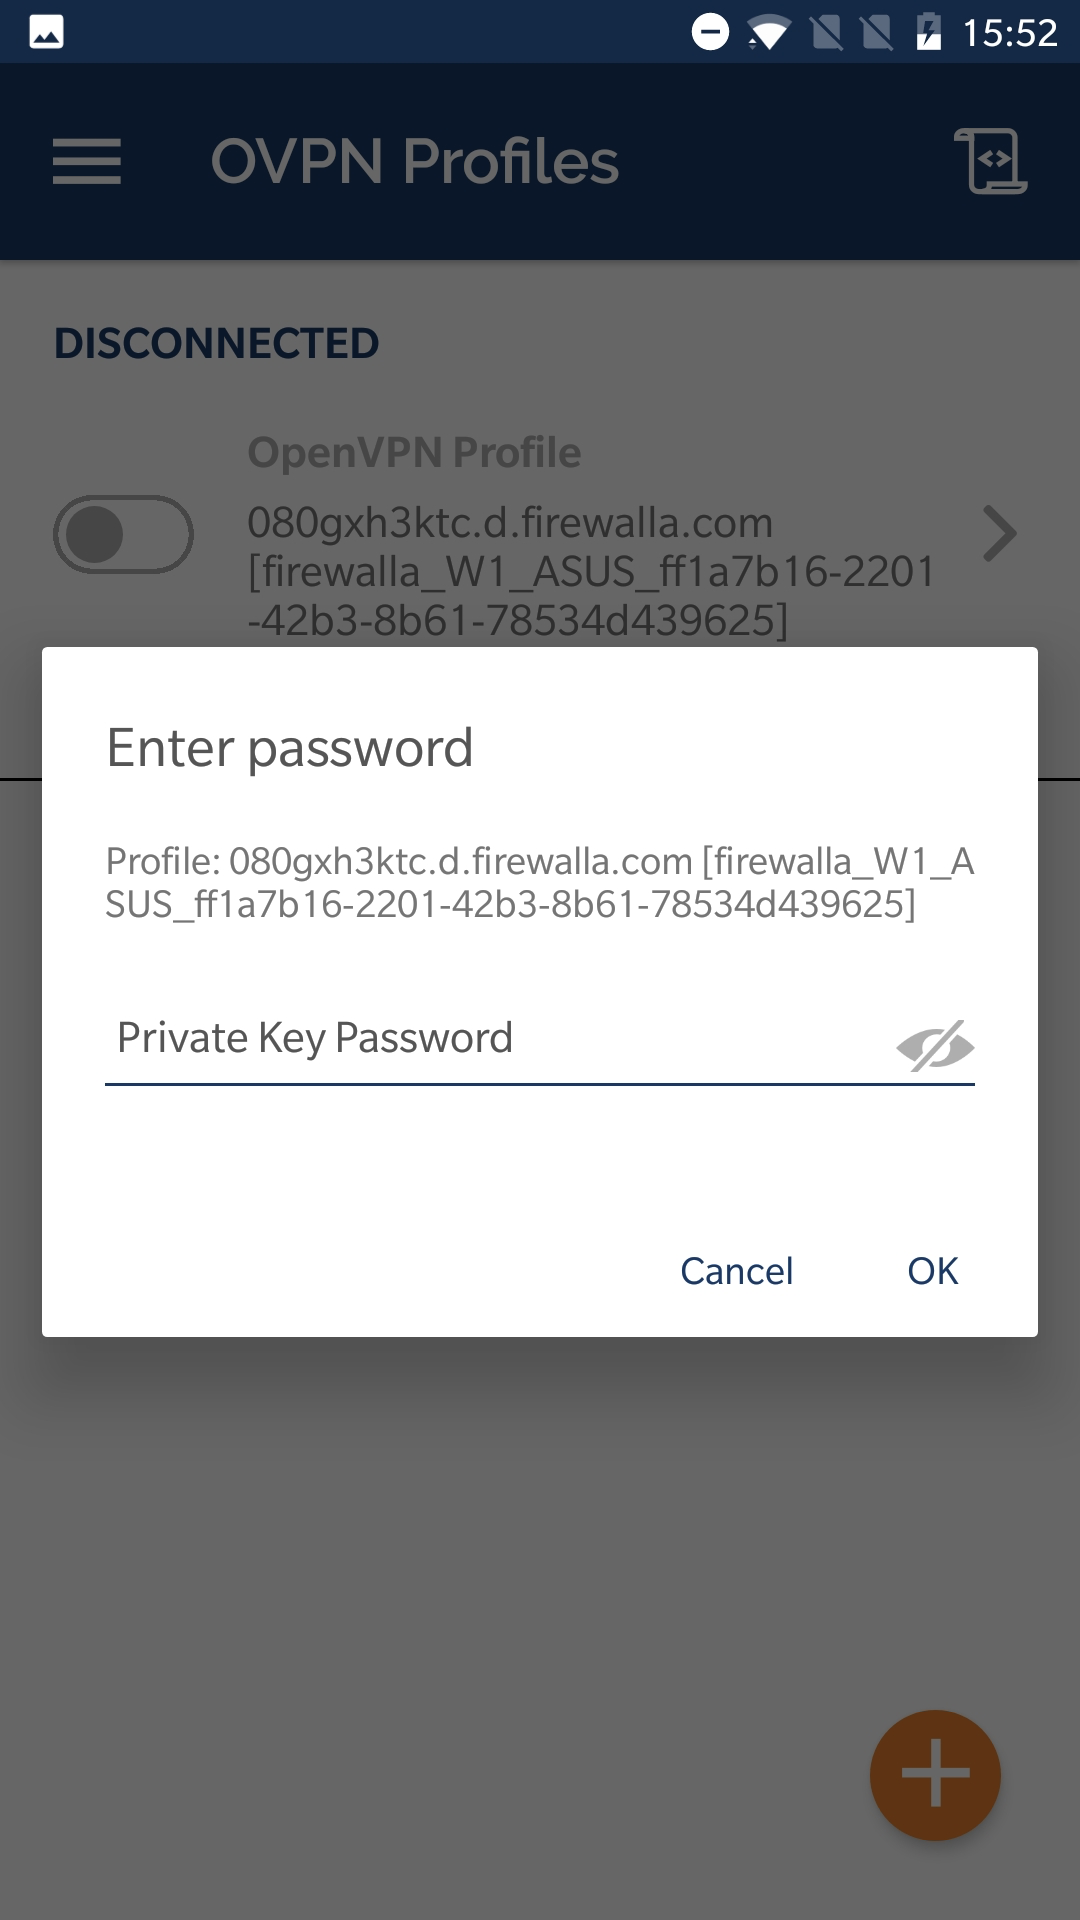 Android VPN client 'Enter Password' prompt for OpenVPN